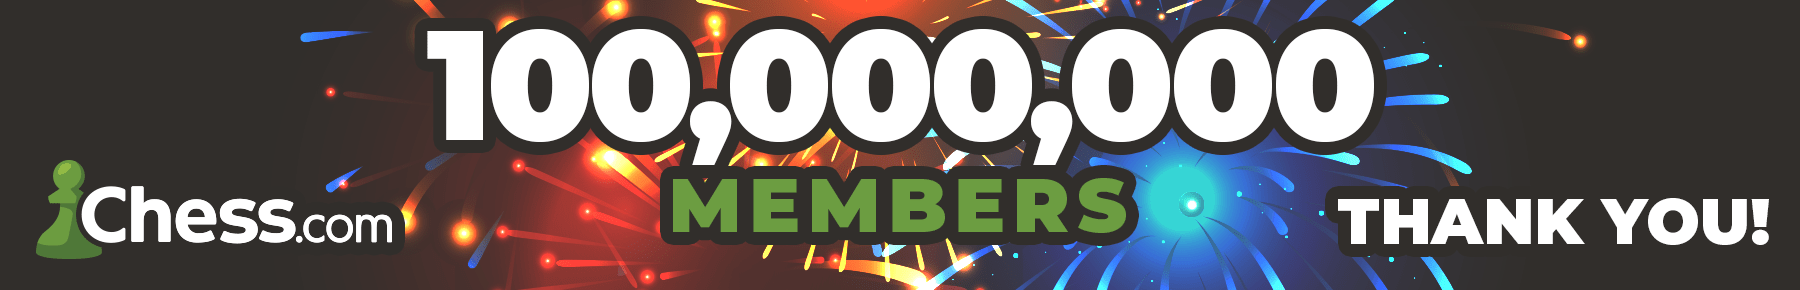 Chess.com hits 100 million members